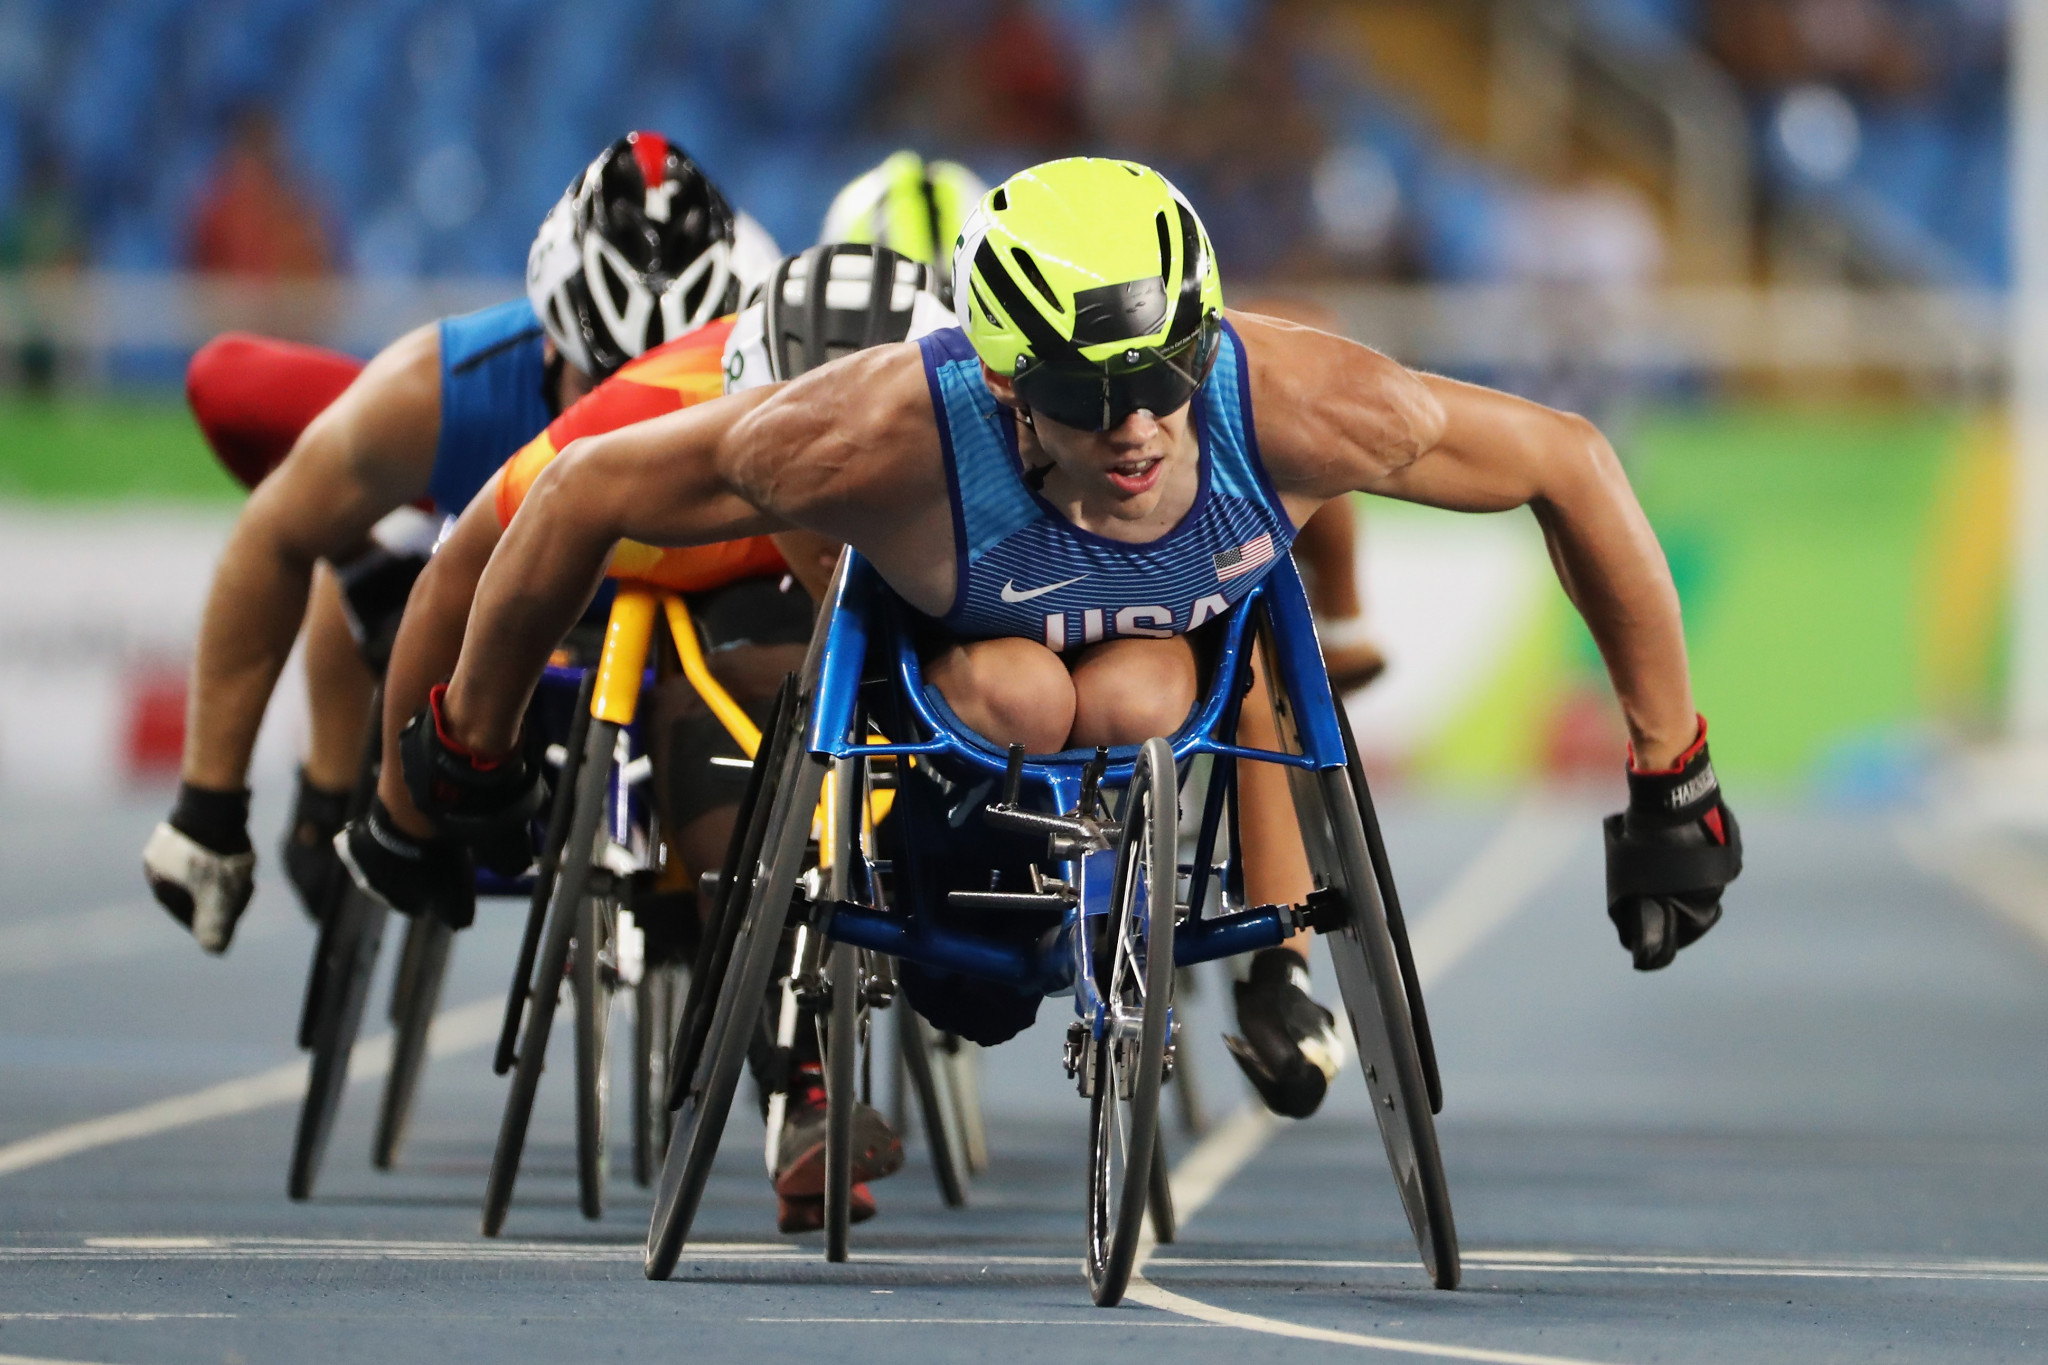 The United States' Daniel Romanchuk broke the men's 800m T54 world record at the World Para Athletics Grand Prix in Arizona ©Getty Images